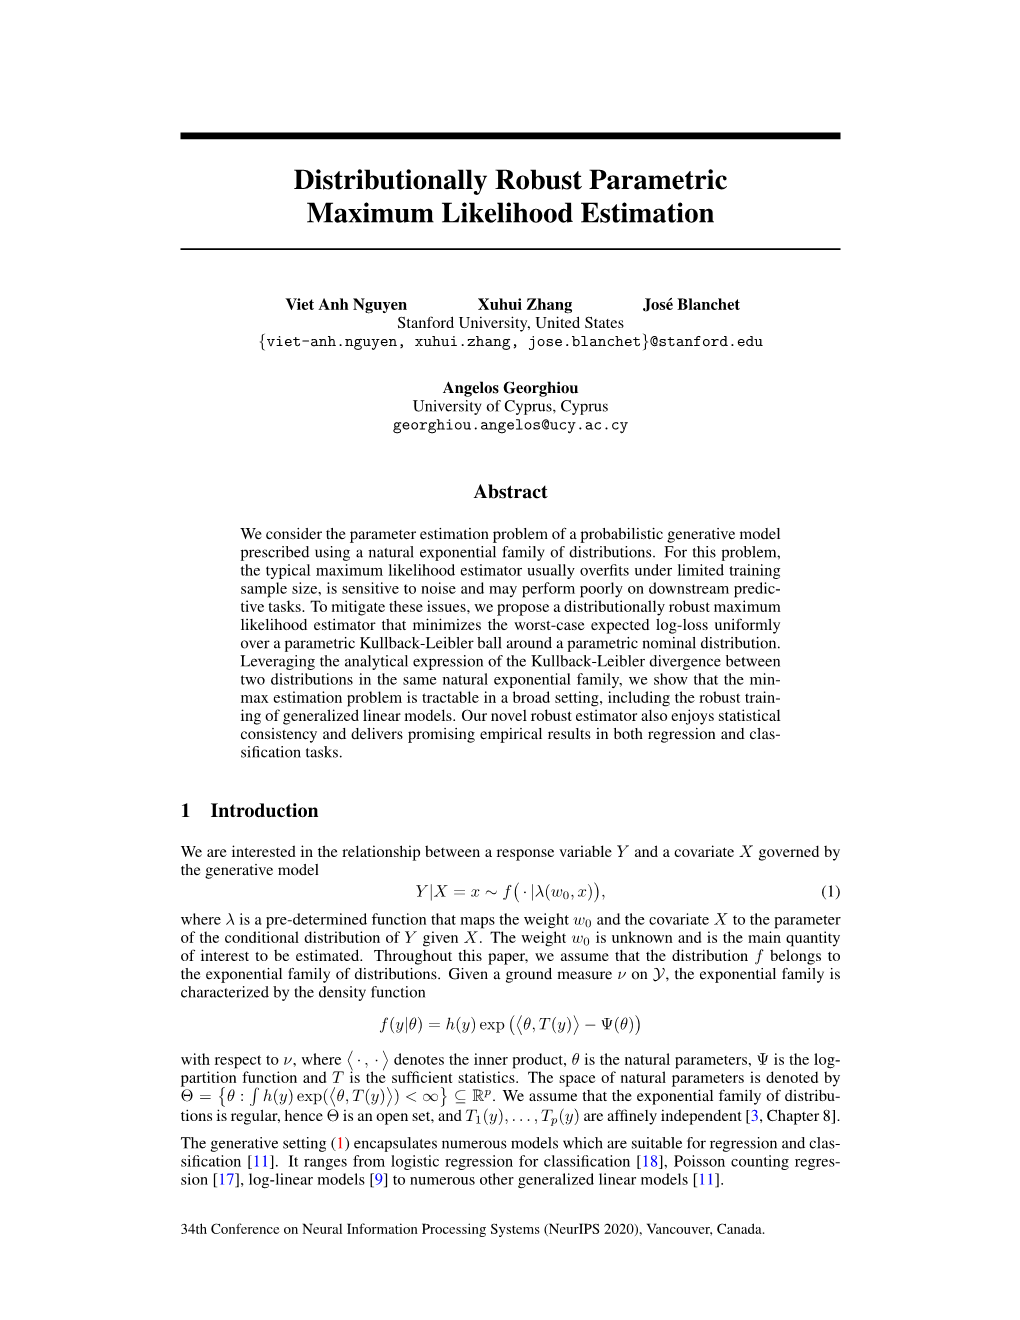 Distributionally Robust Parametric Maximum Likelihood Estimation